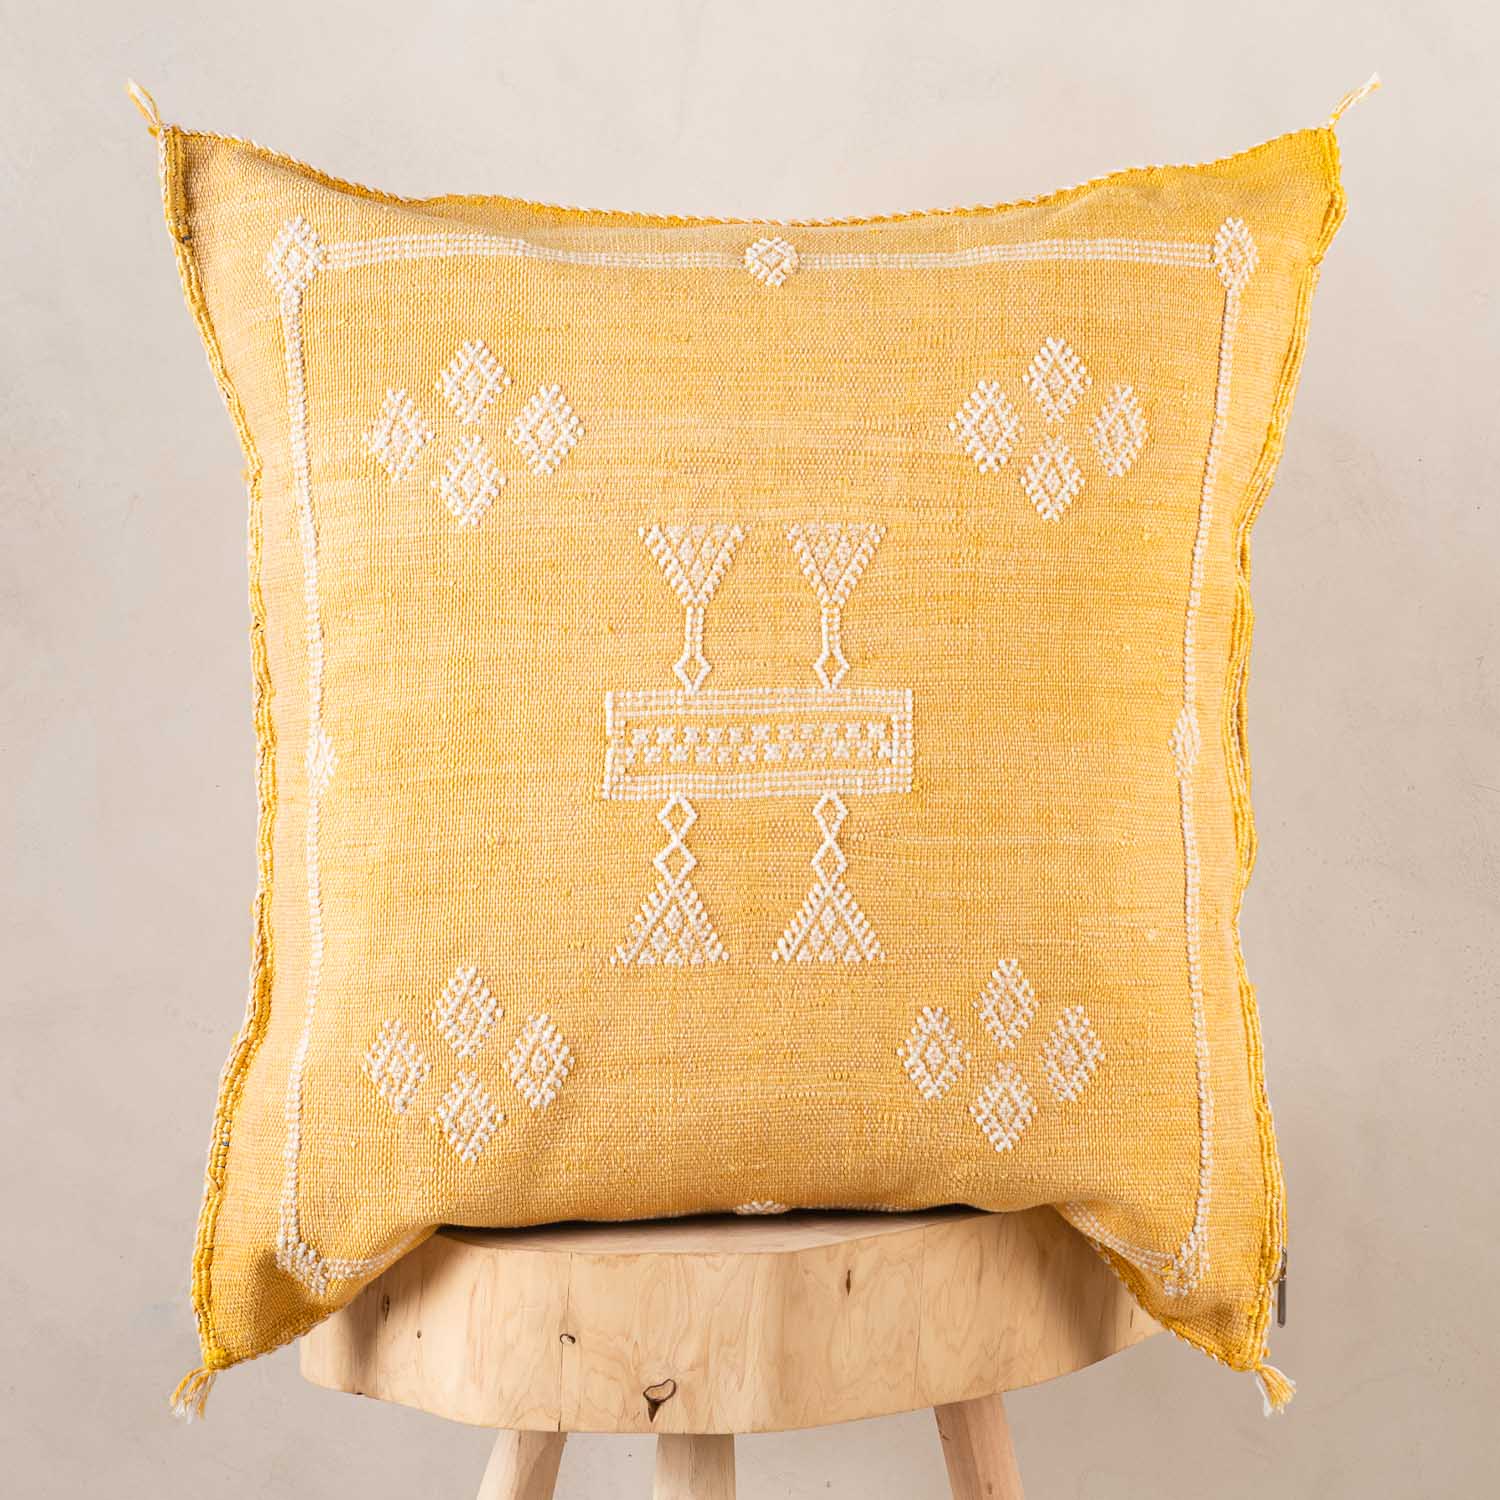 Yellow Cactus silk pillow cover